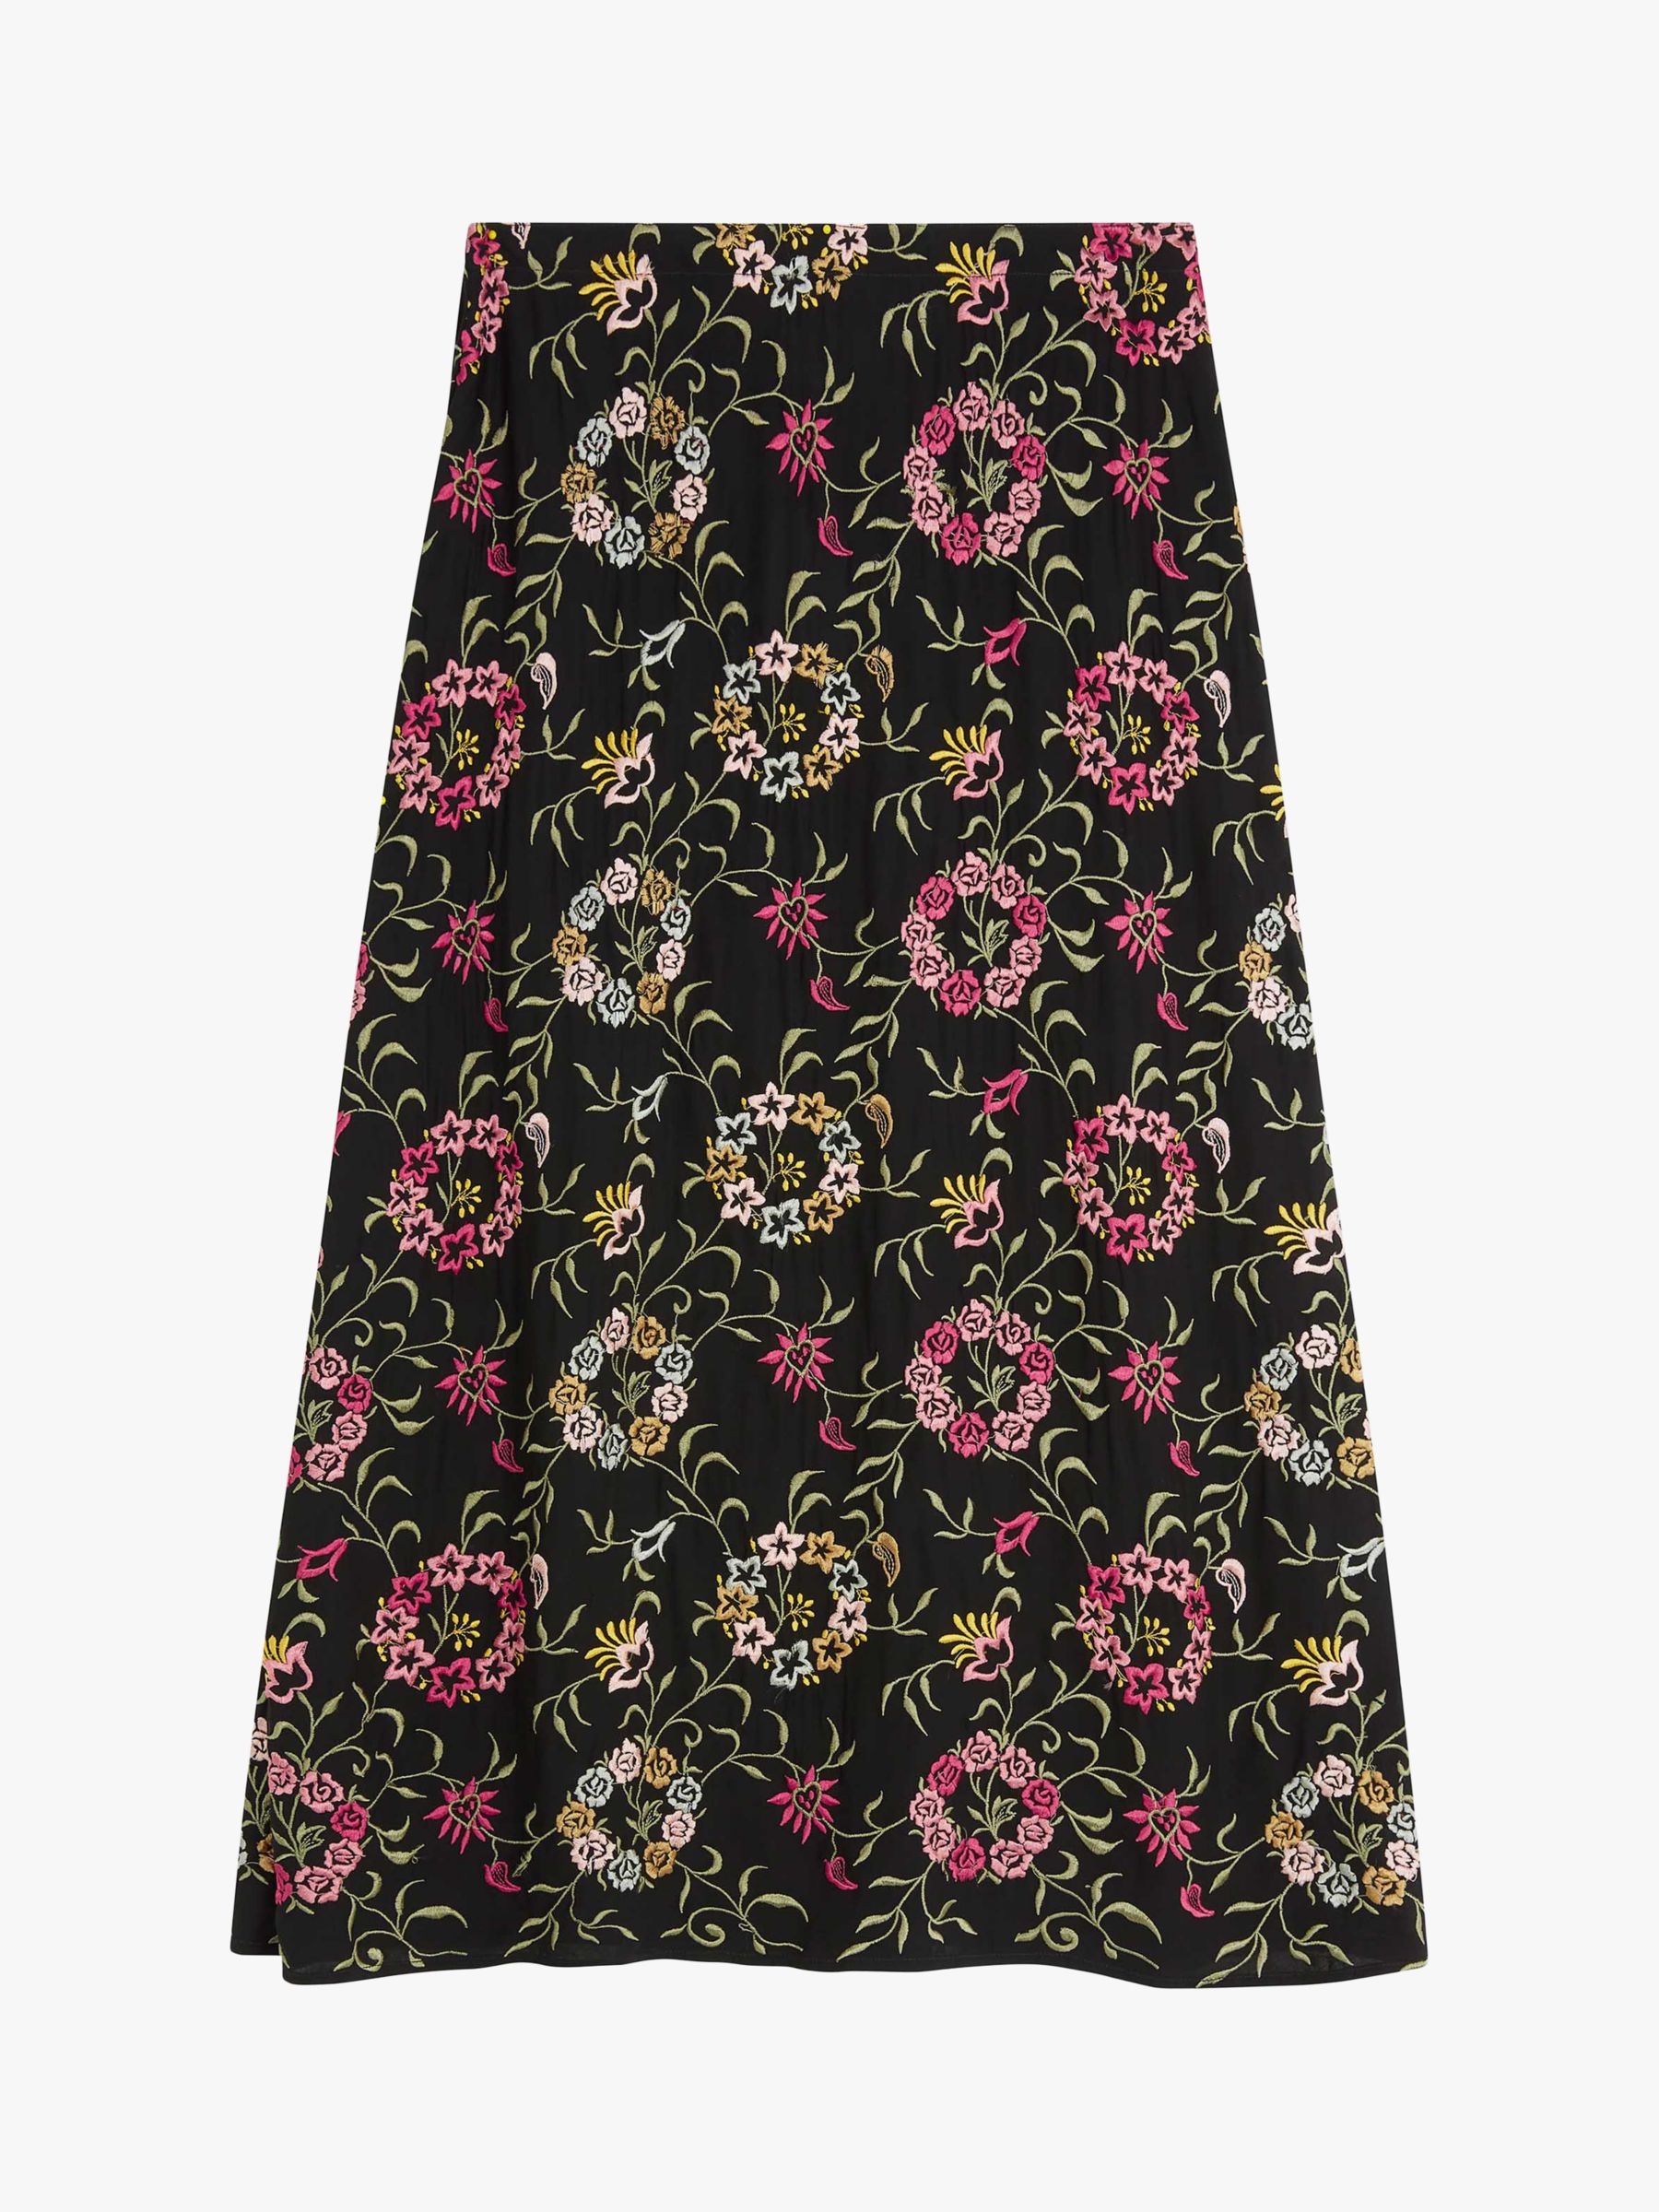 Brora Embroidered Floral Skirt, Black/Multi at John Lewis & Partners